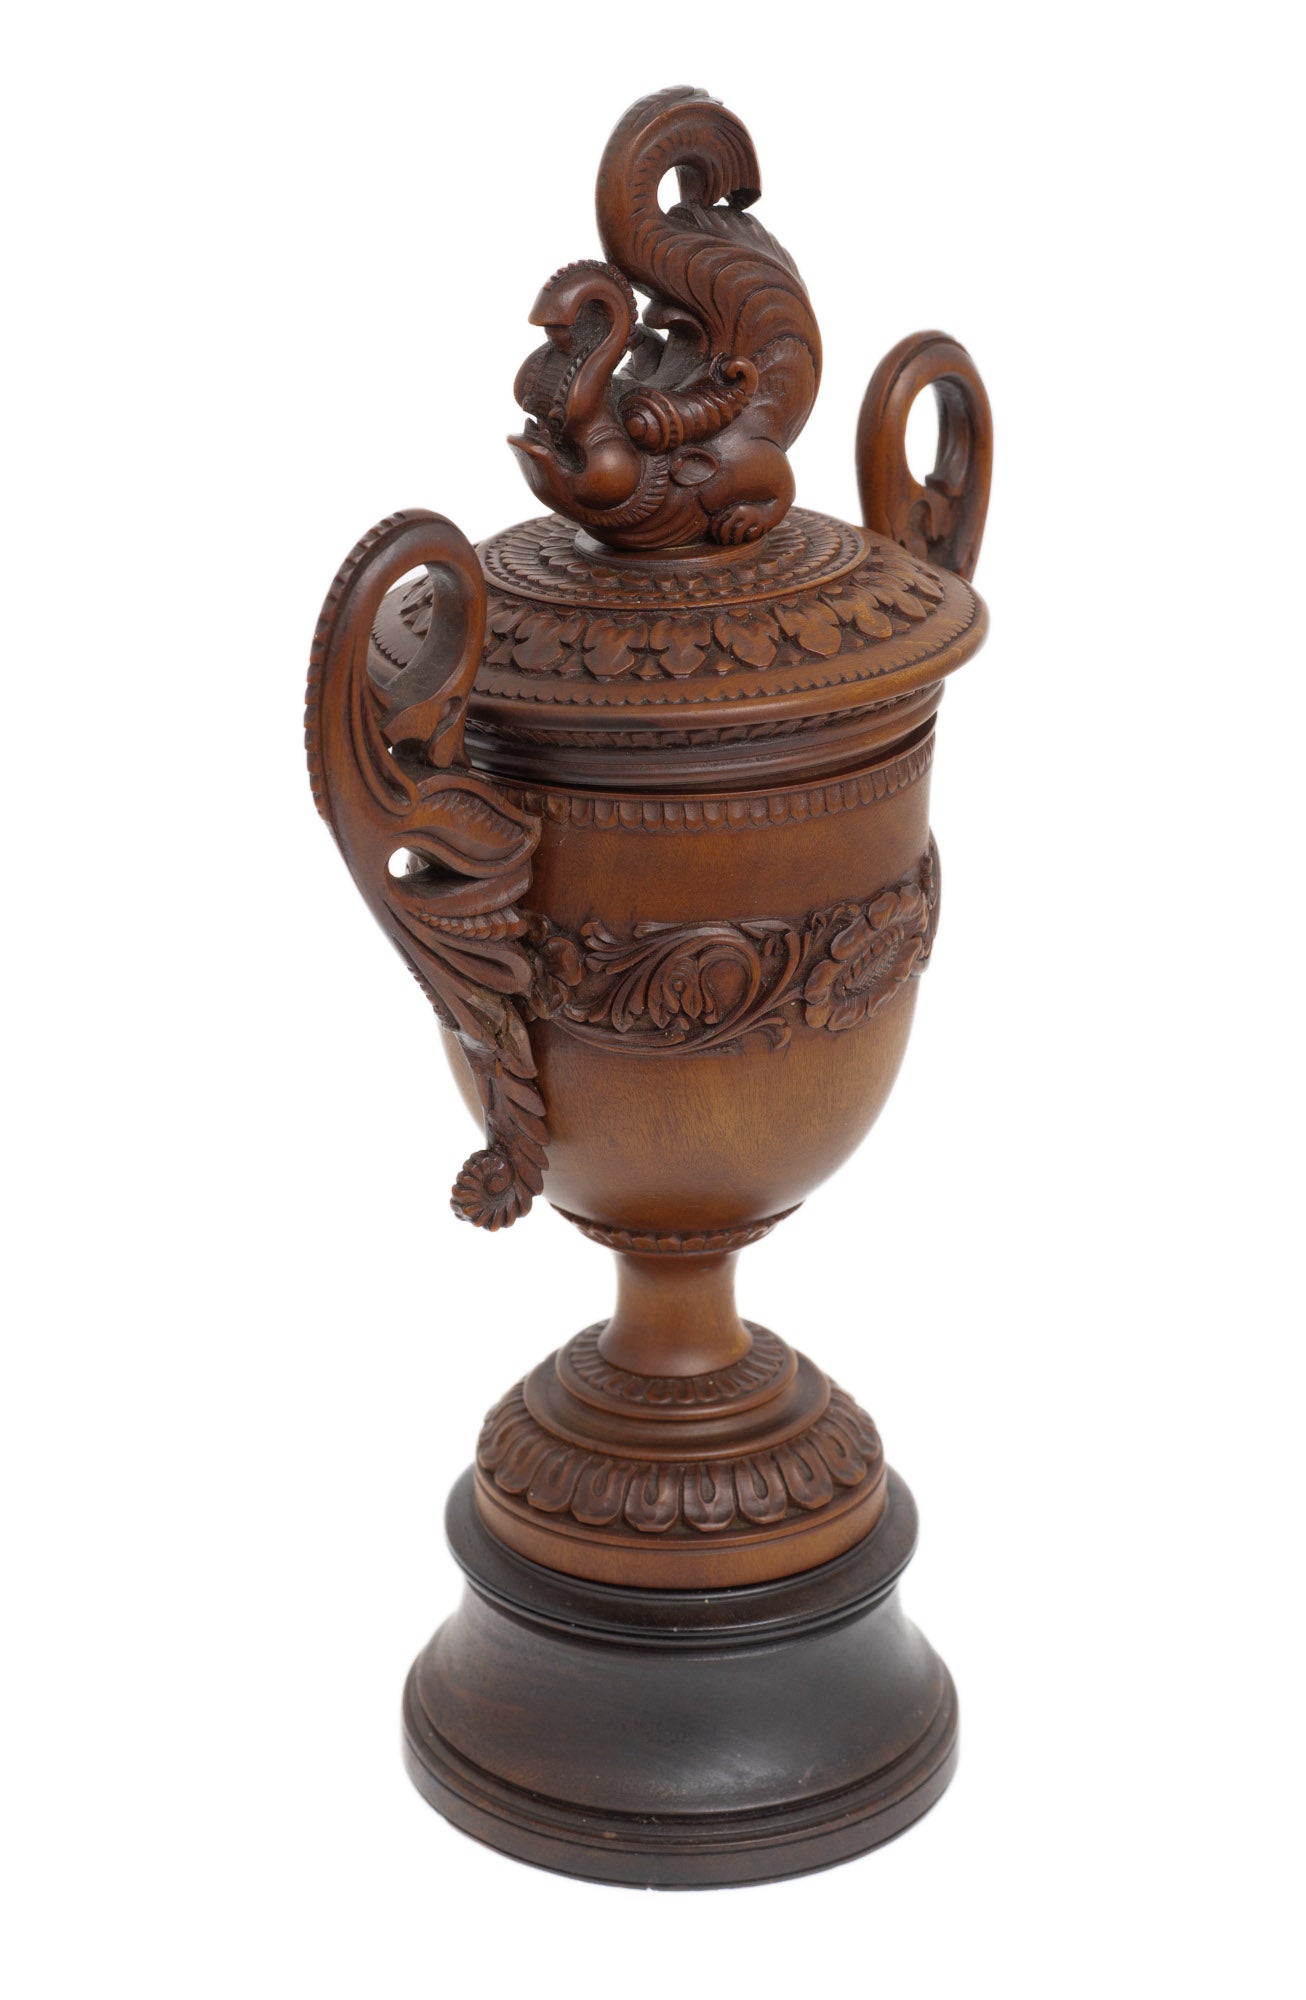 Vintage Indian Carved Wood Trophy Shaped Twin Handled Vase/Cup & Makara Finial (Code 2853)